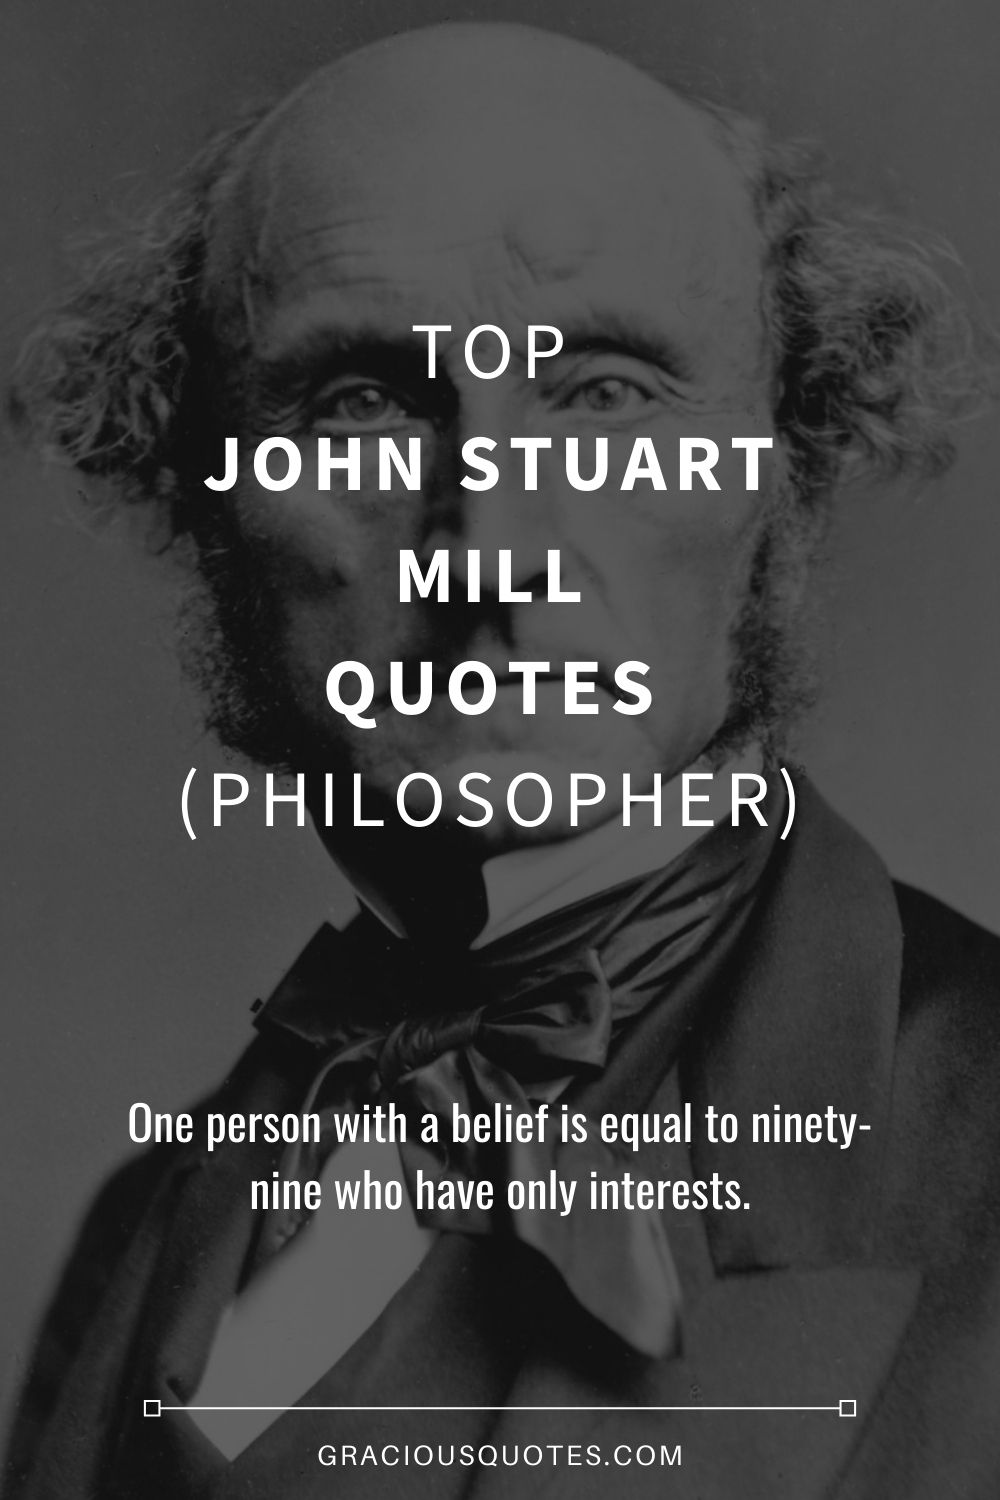 Top John Stuart Mill Quotes (PHILOSOPHER) - Gracious Quotes